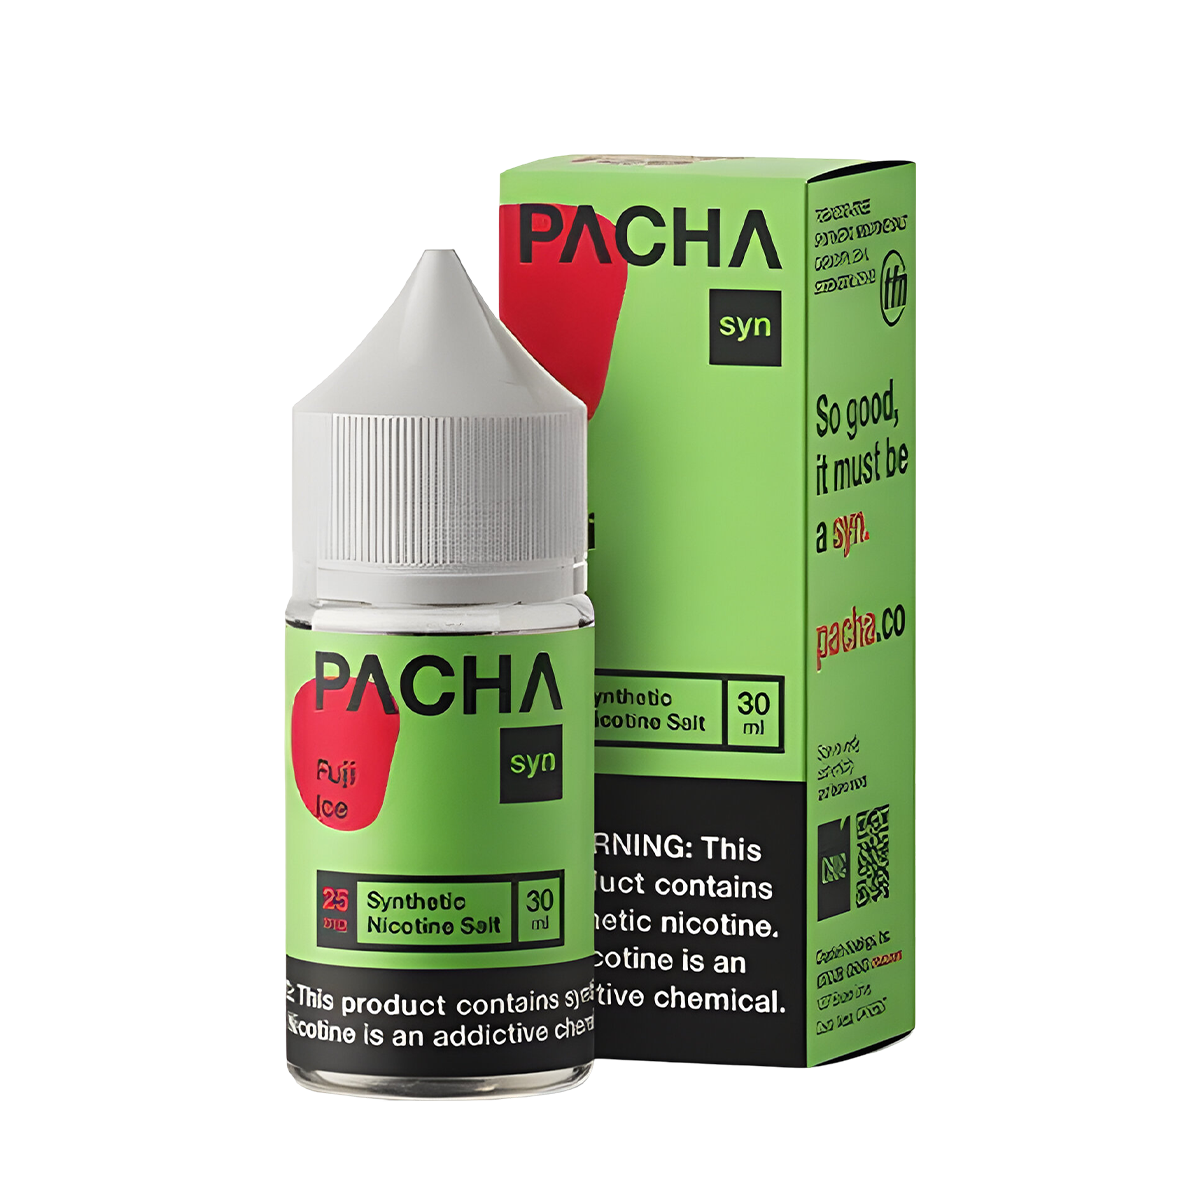 Pacha Syn Salt Nicotione Vape Juice 25 Mg 30 Ml Fuji Ice Pachamama